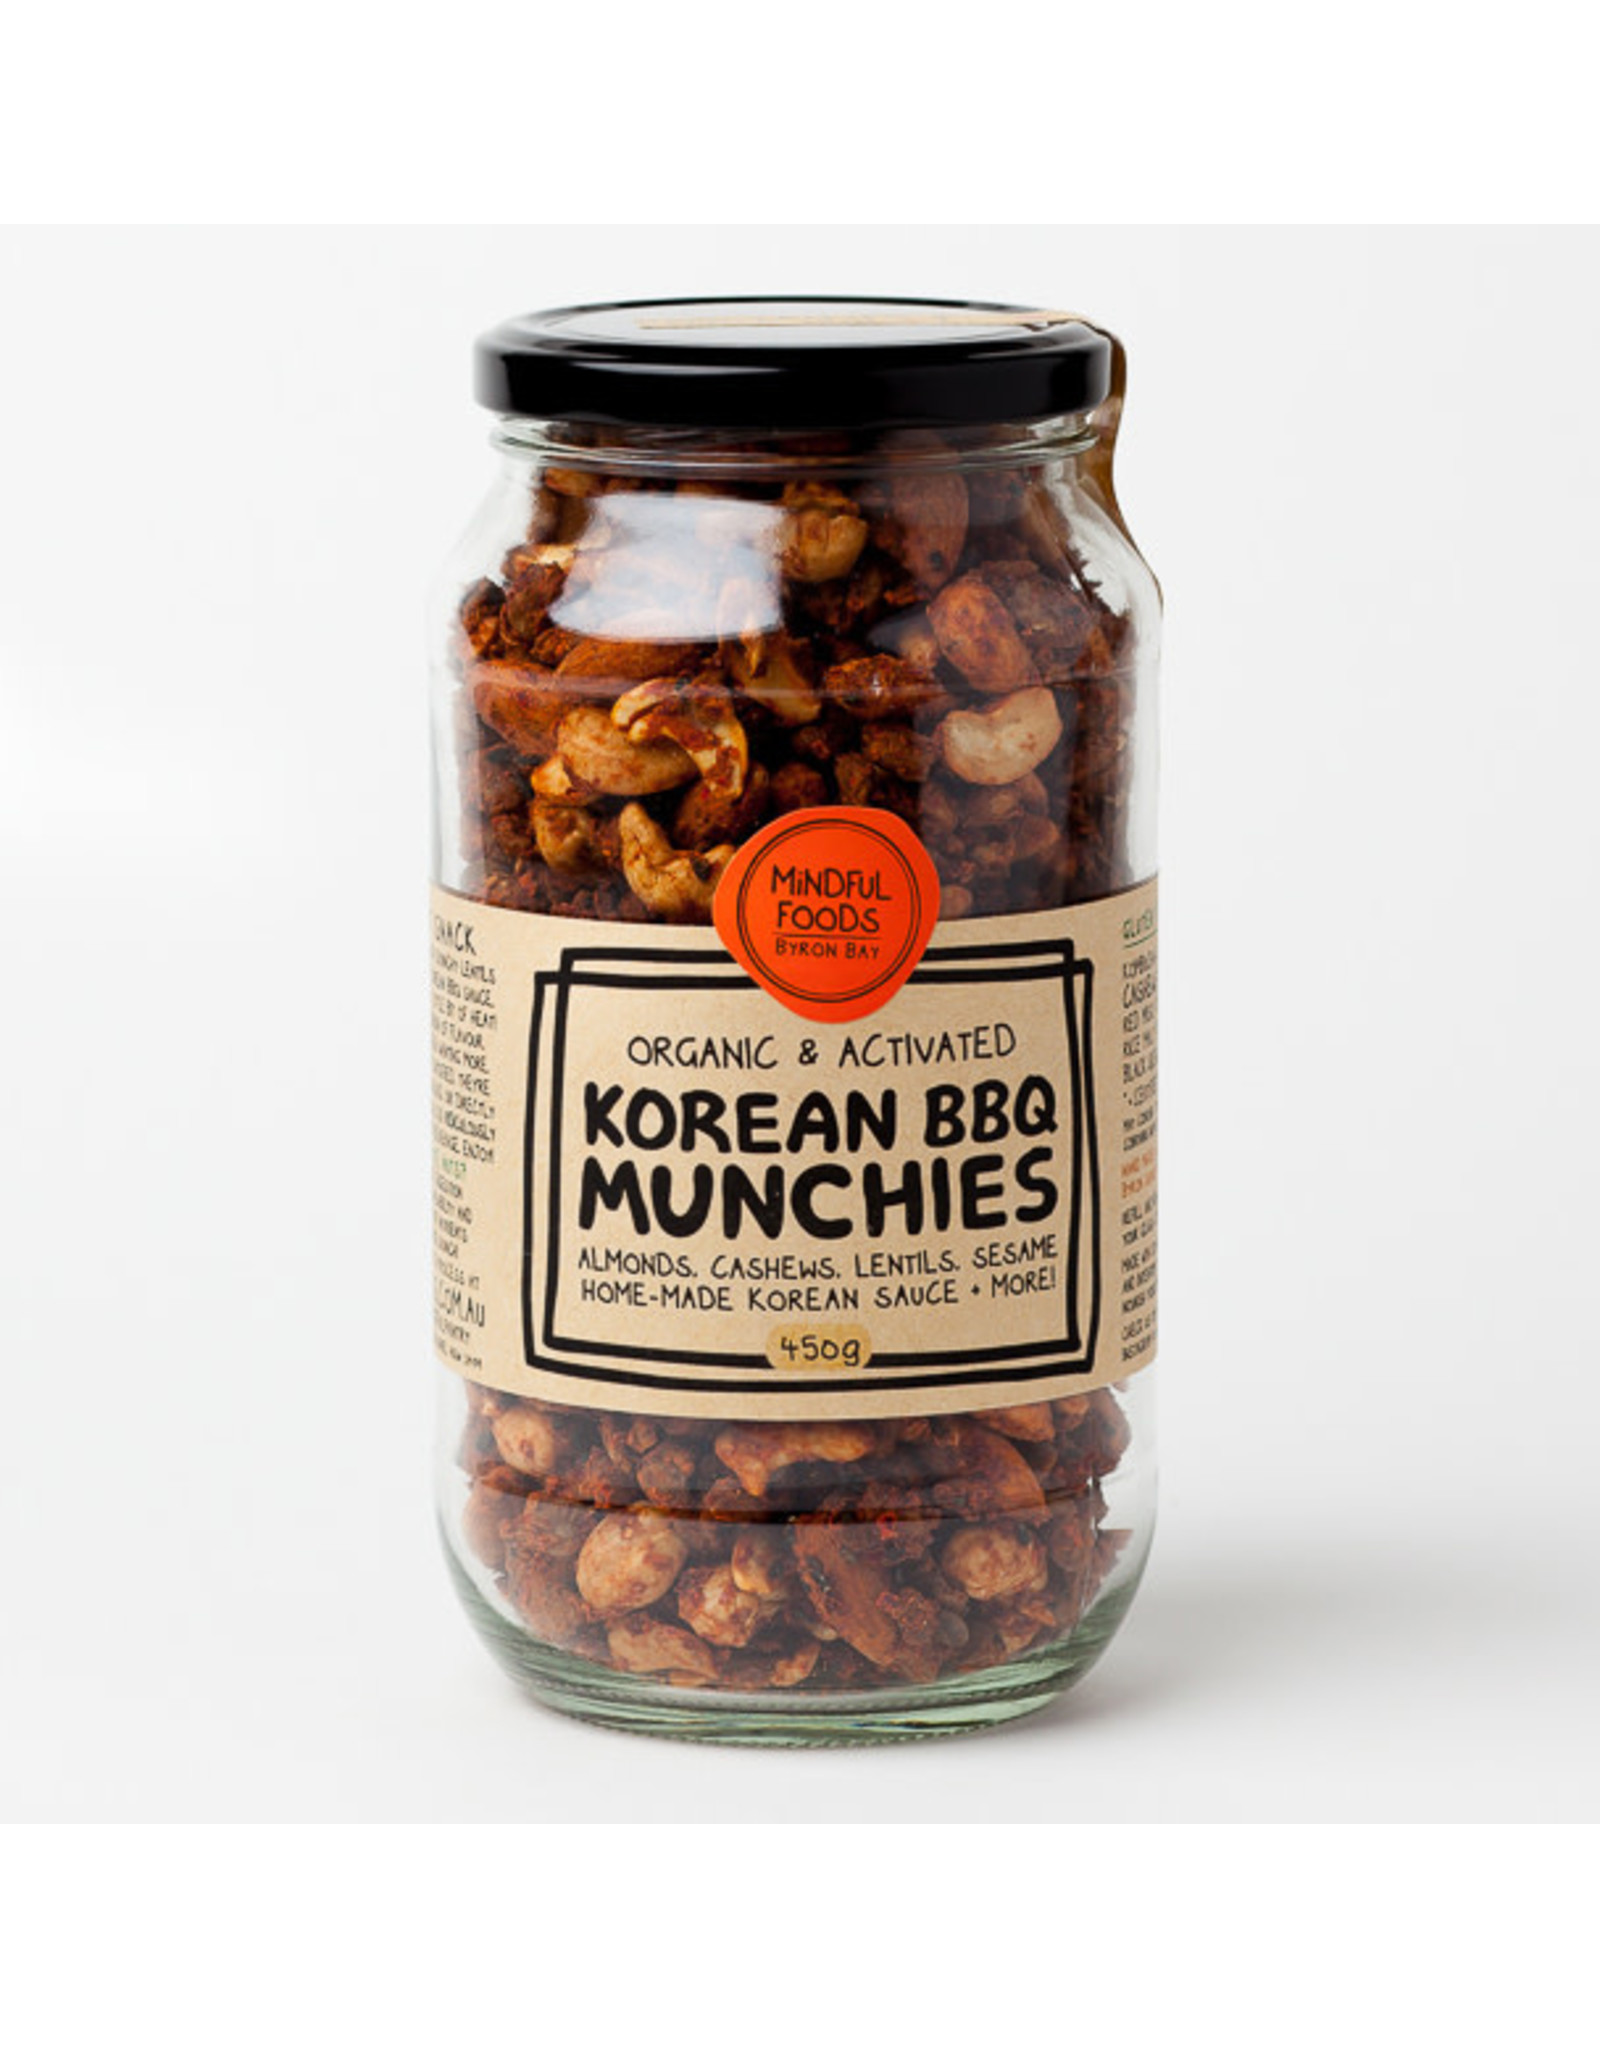 Mindful Foods Gochujang (Korean BBQ) Munchies